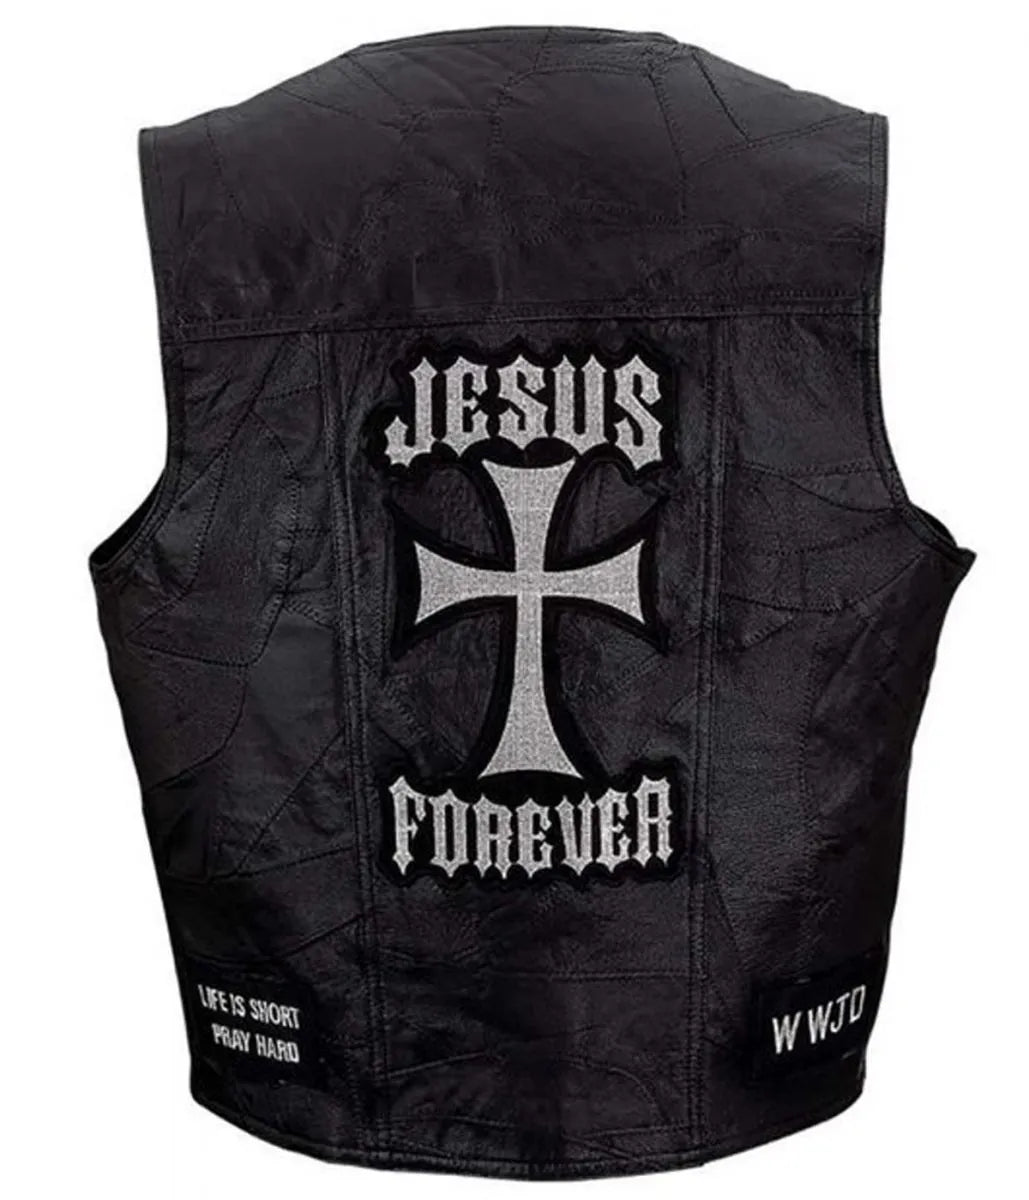 Jesus Forever Christian Motorcycle Black Leather Vest